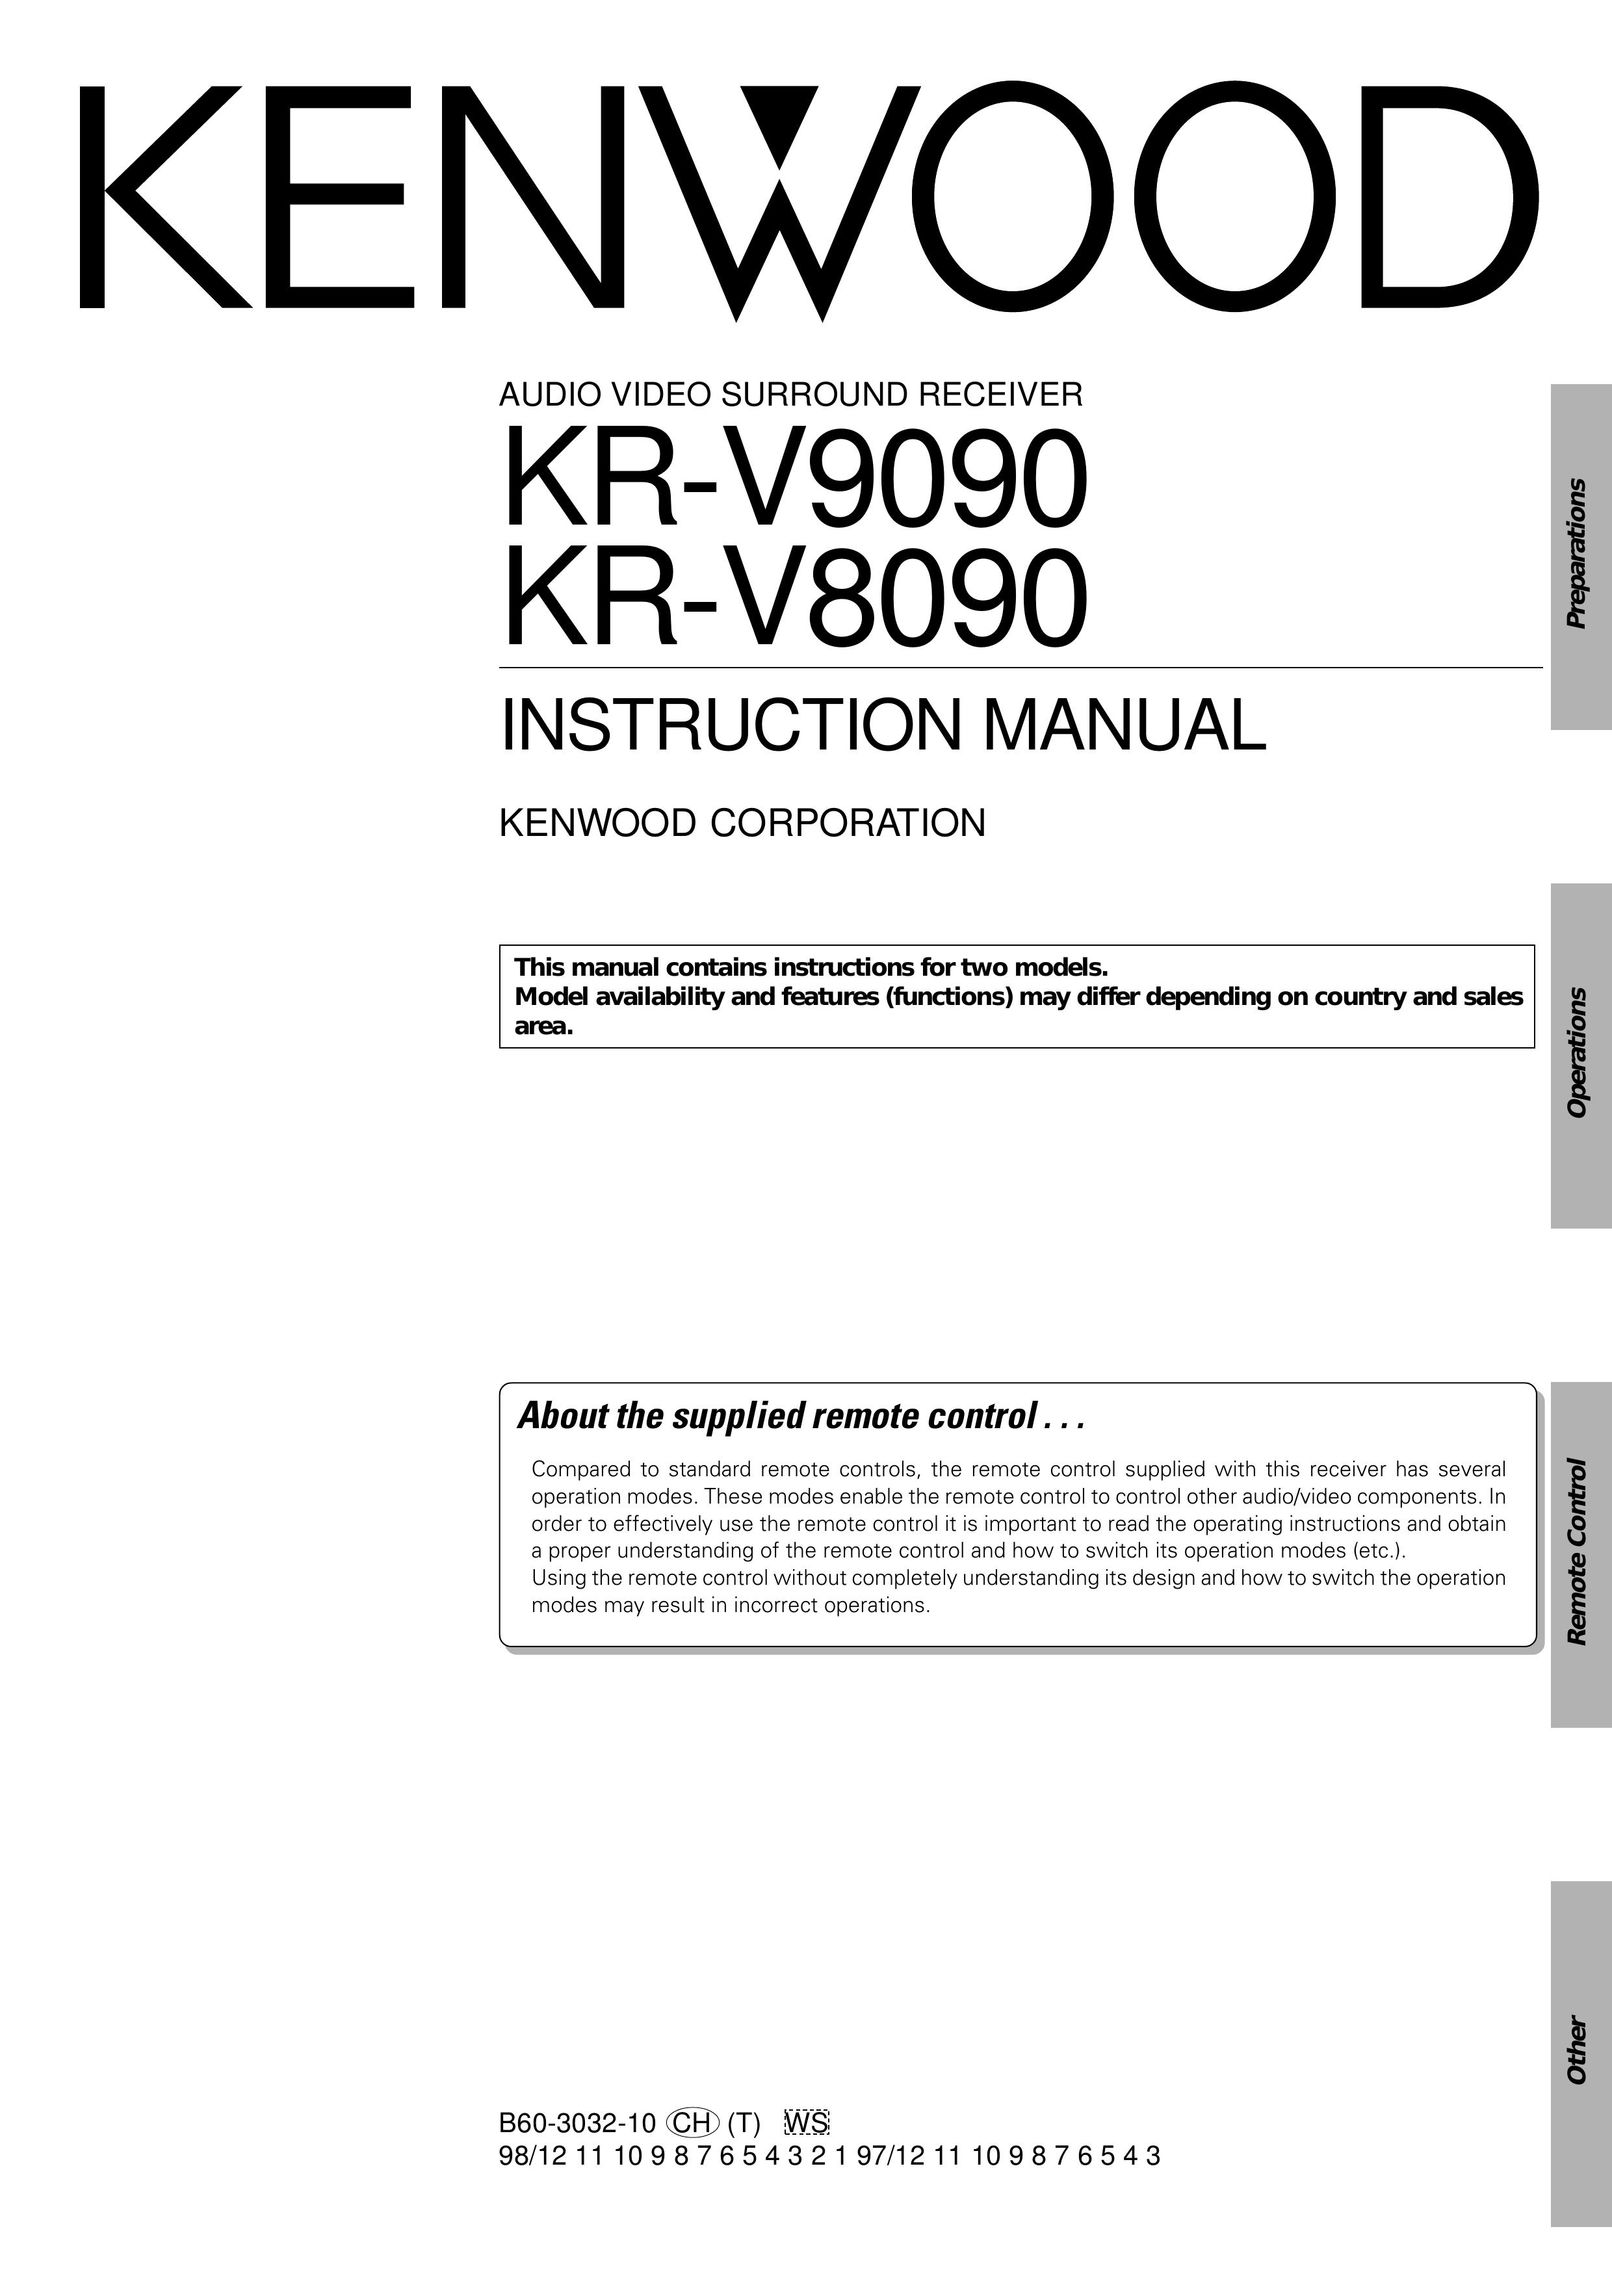 Kenwood KR-V9090 Stereo Receiver User Manual